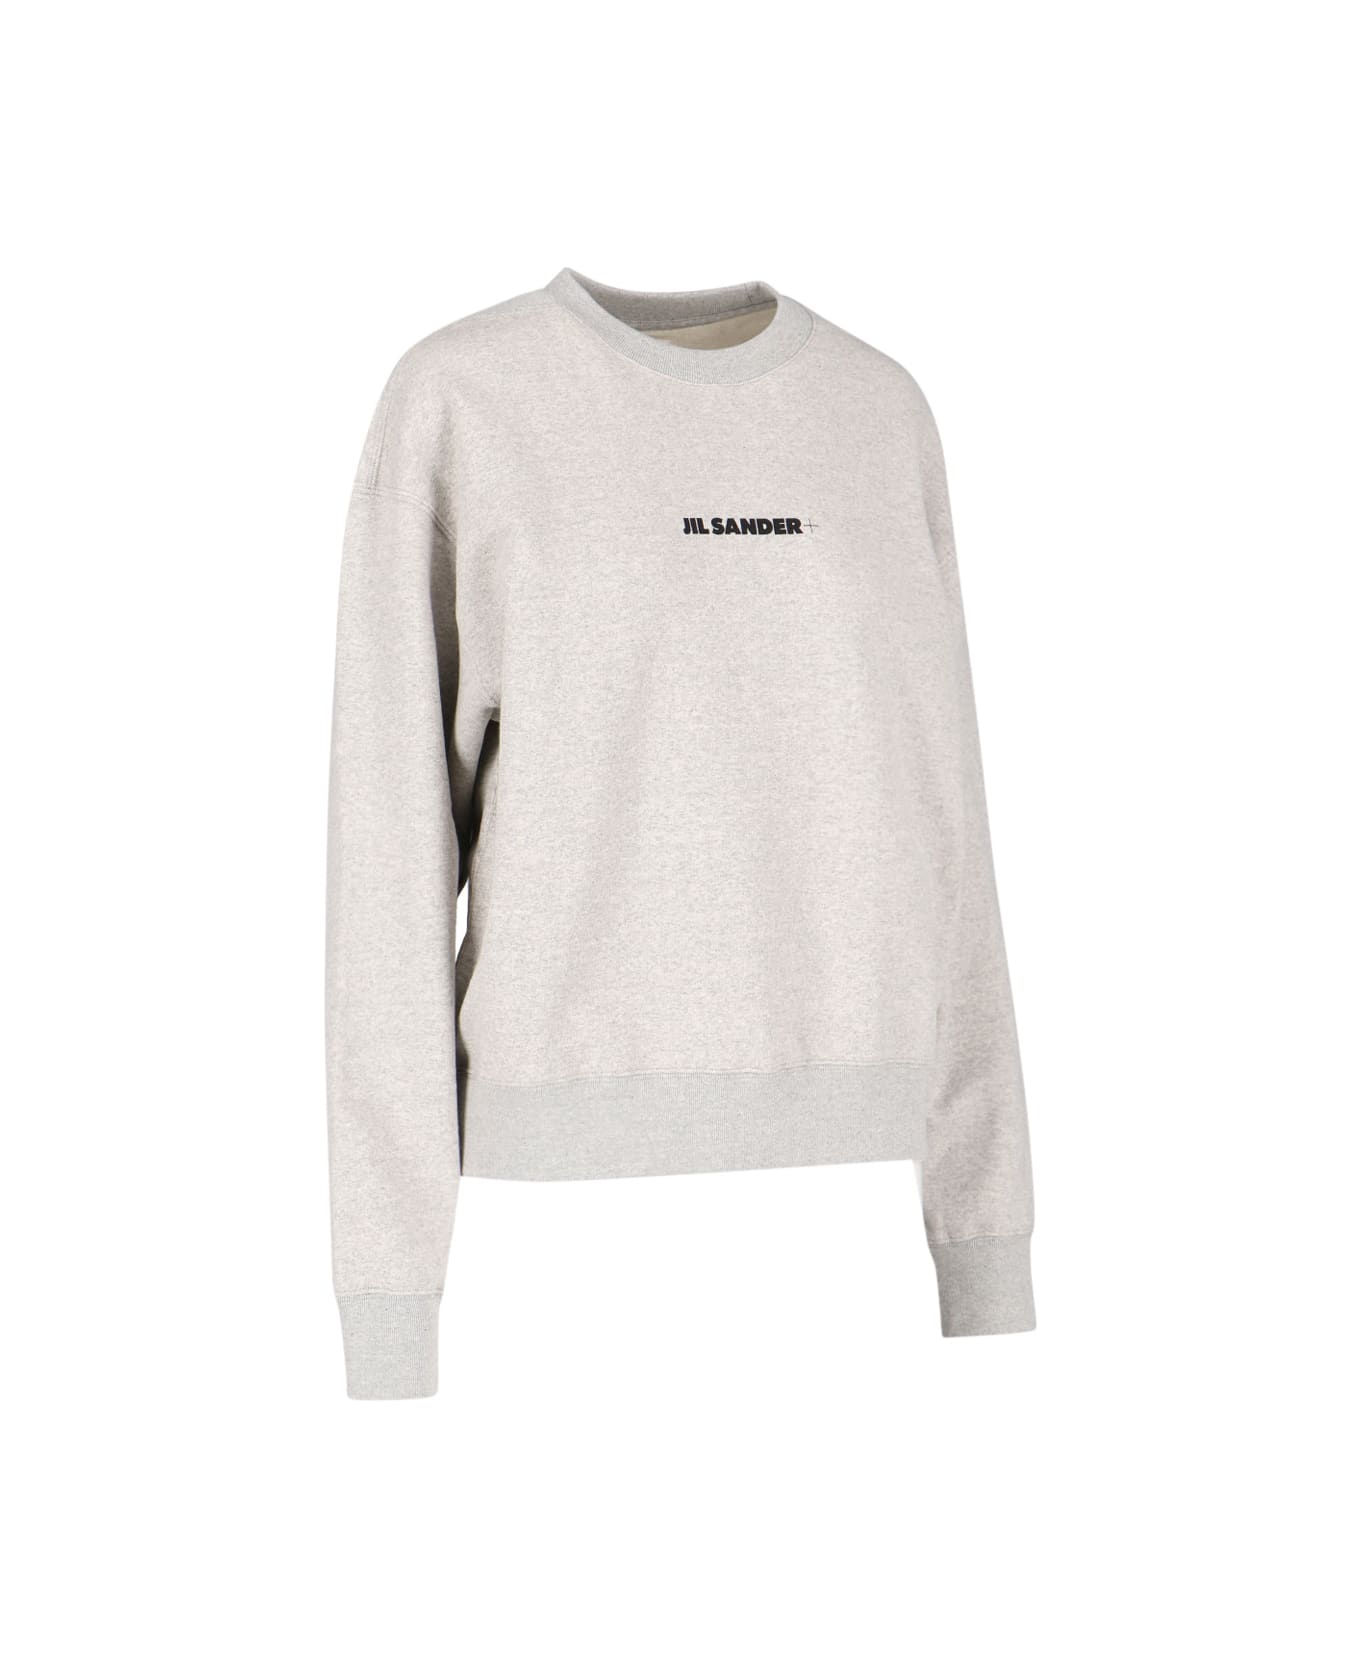 Jil Sander Oversize Logo Sweatshirt - Gray フリース